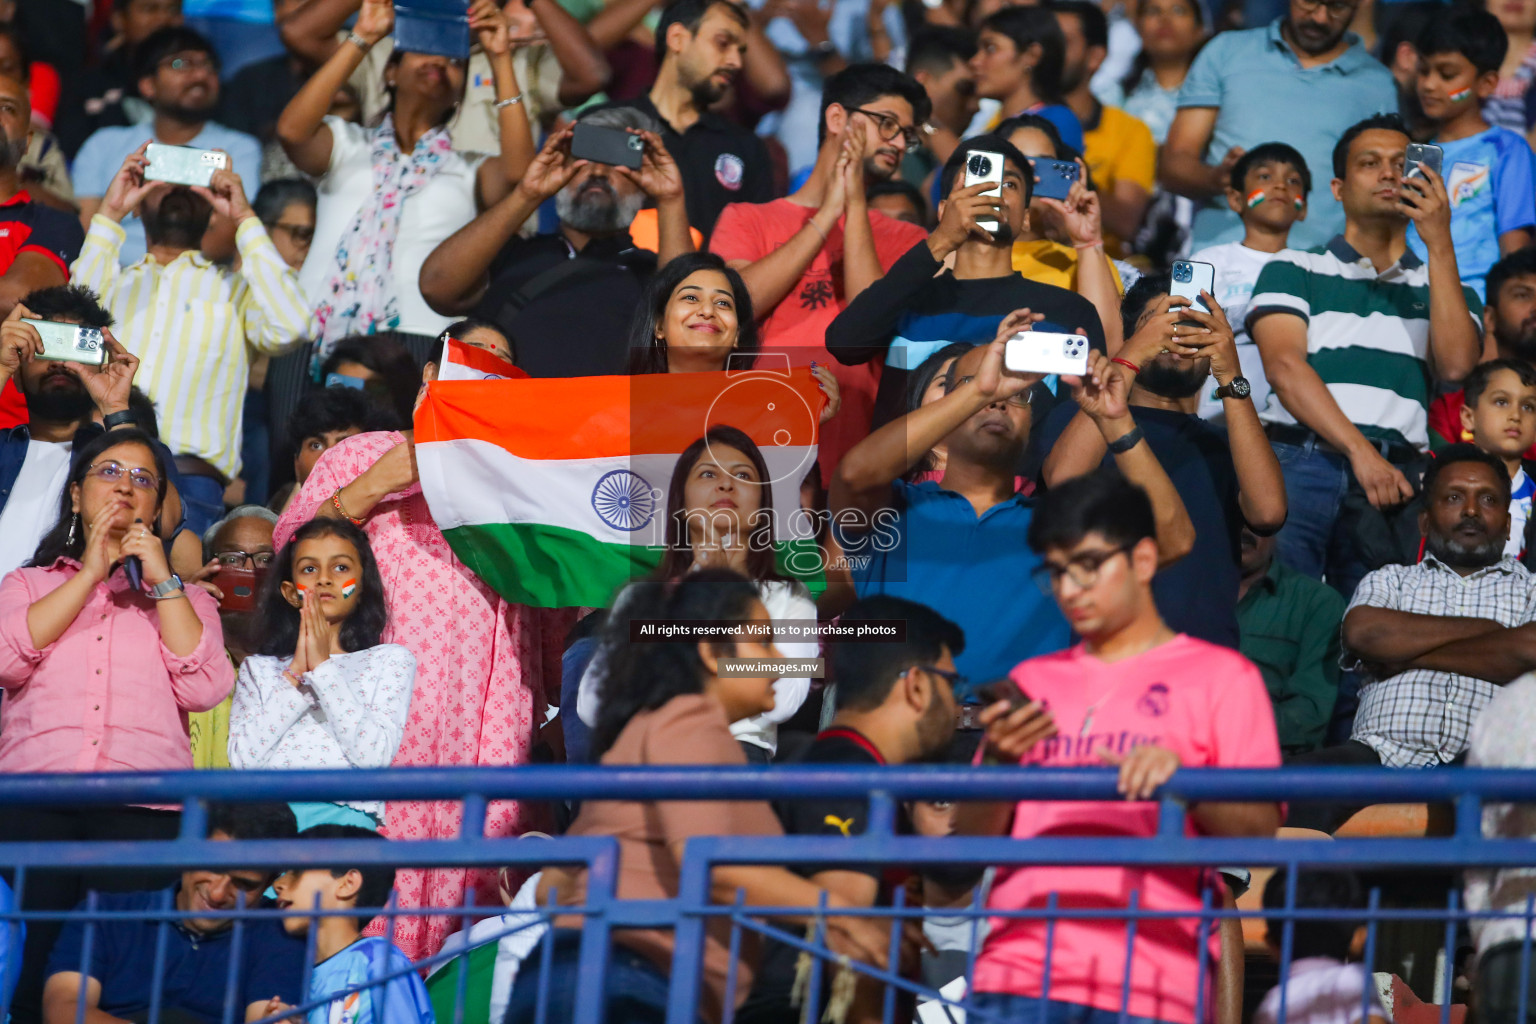 Lebanon vs India in the Semi-final of SAFF Championship 2023 held in Sree Kanteerava Stadium, Bengaluru, India, on Saturday, 1st July 2023. Photos: Nausham Waheed, Hassan Simah / images.mv